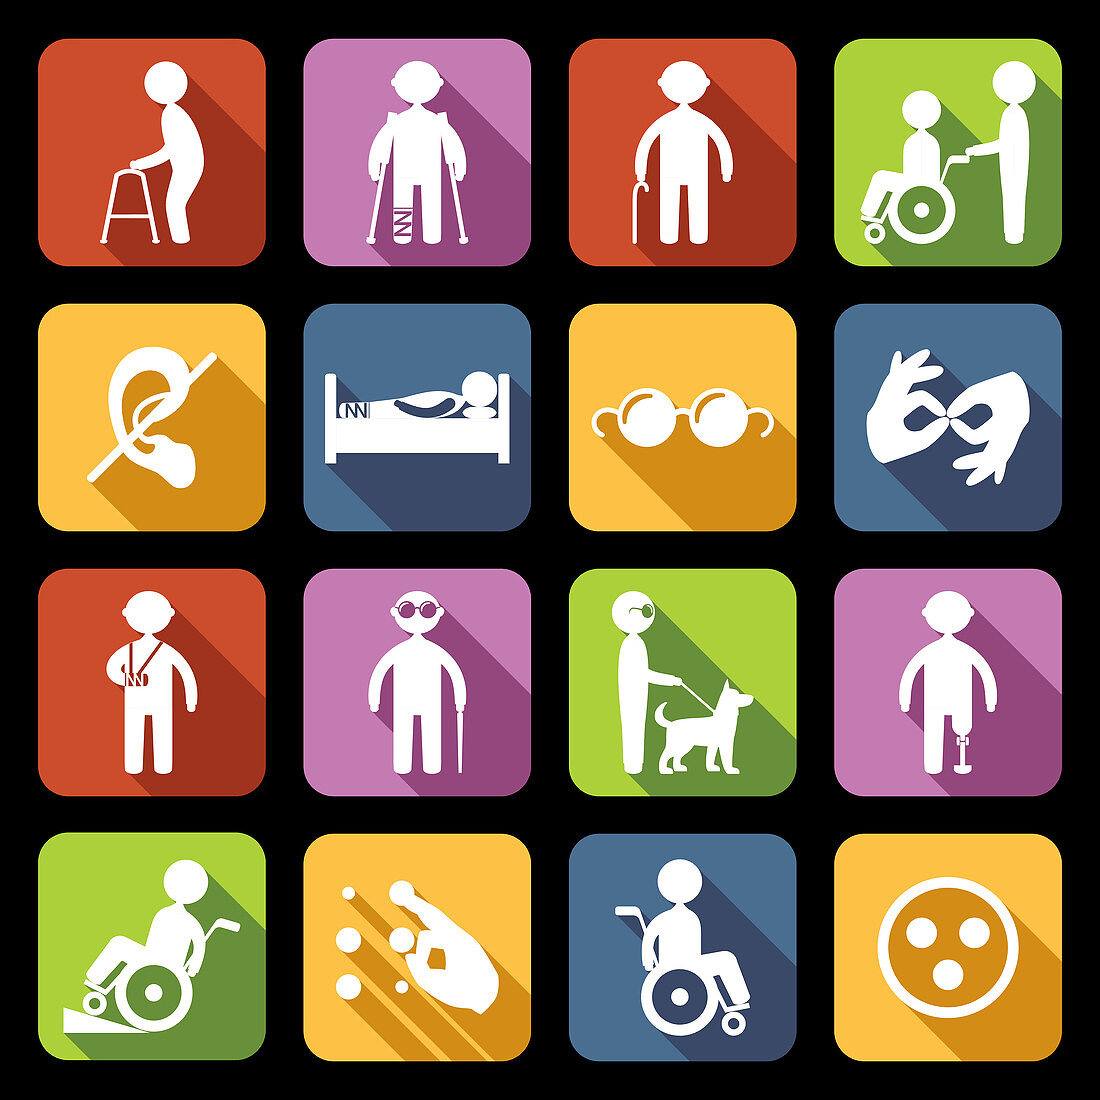 Disability icons, illustration